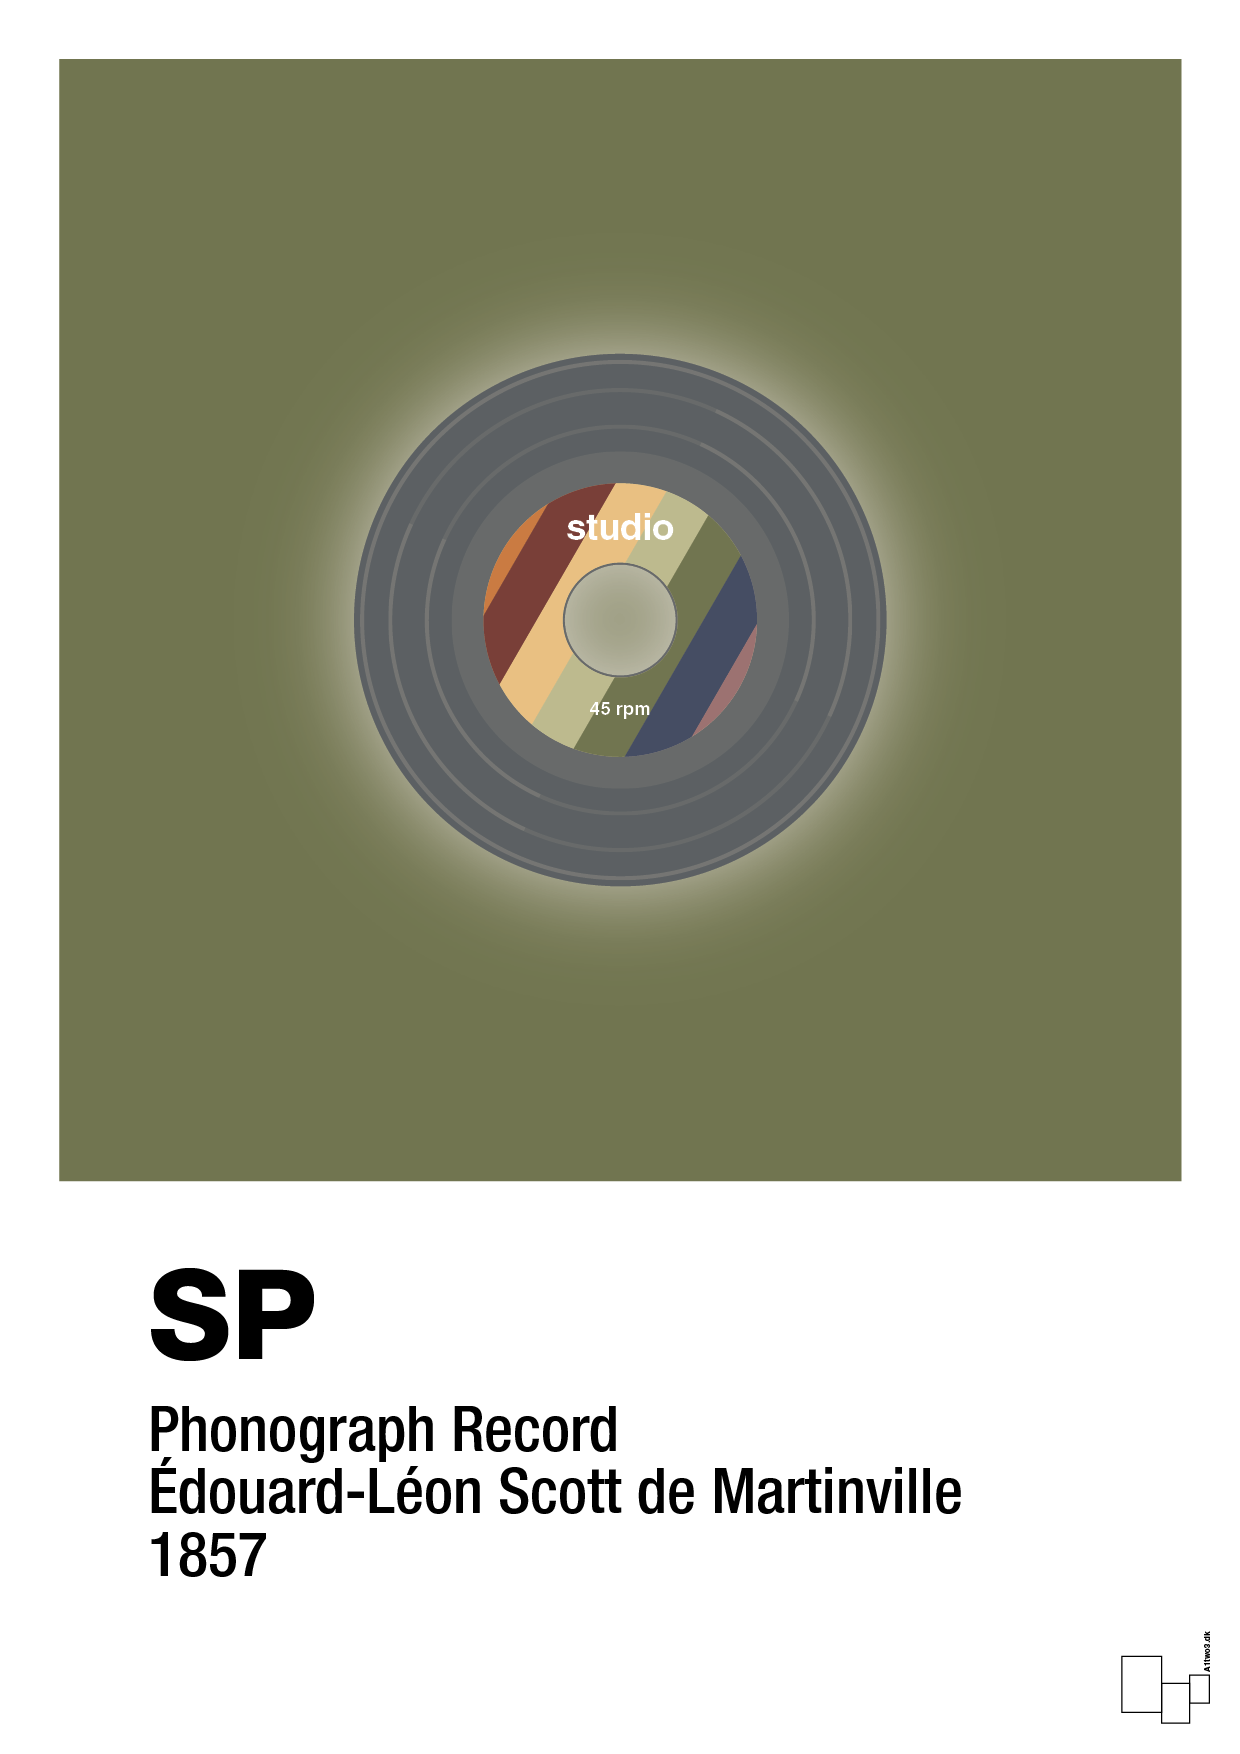 vinylplade 45rpm - Plakat med Grafik i Secret Meadow